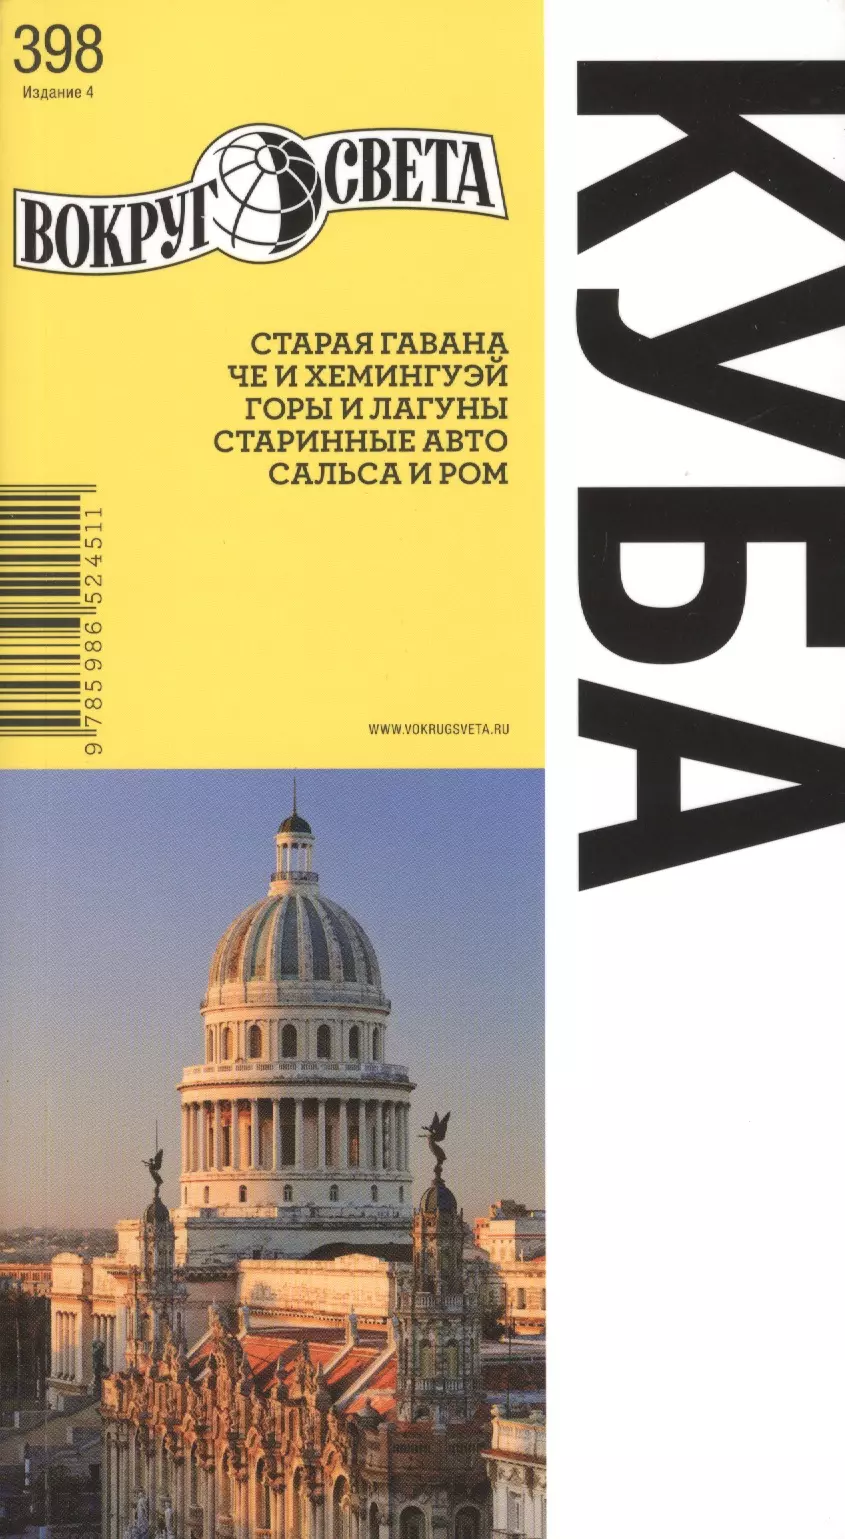 Ларионов А.Д. - Куба (НФ изд. 4-е)